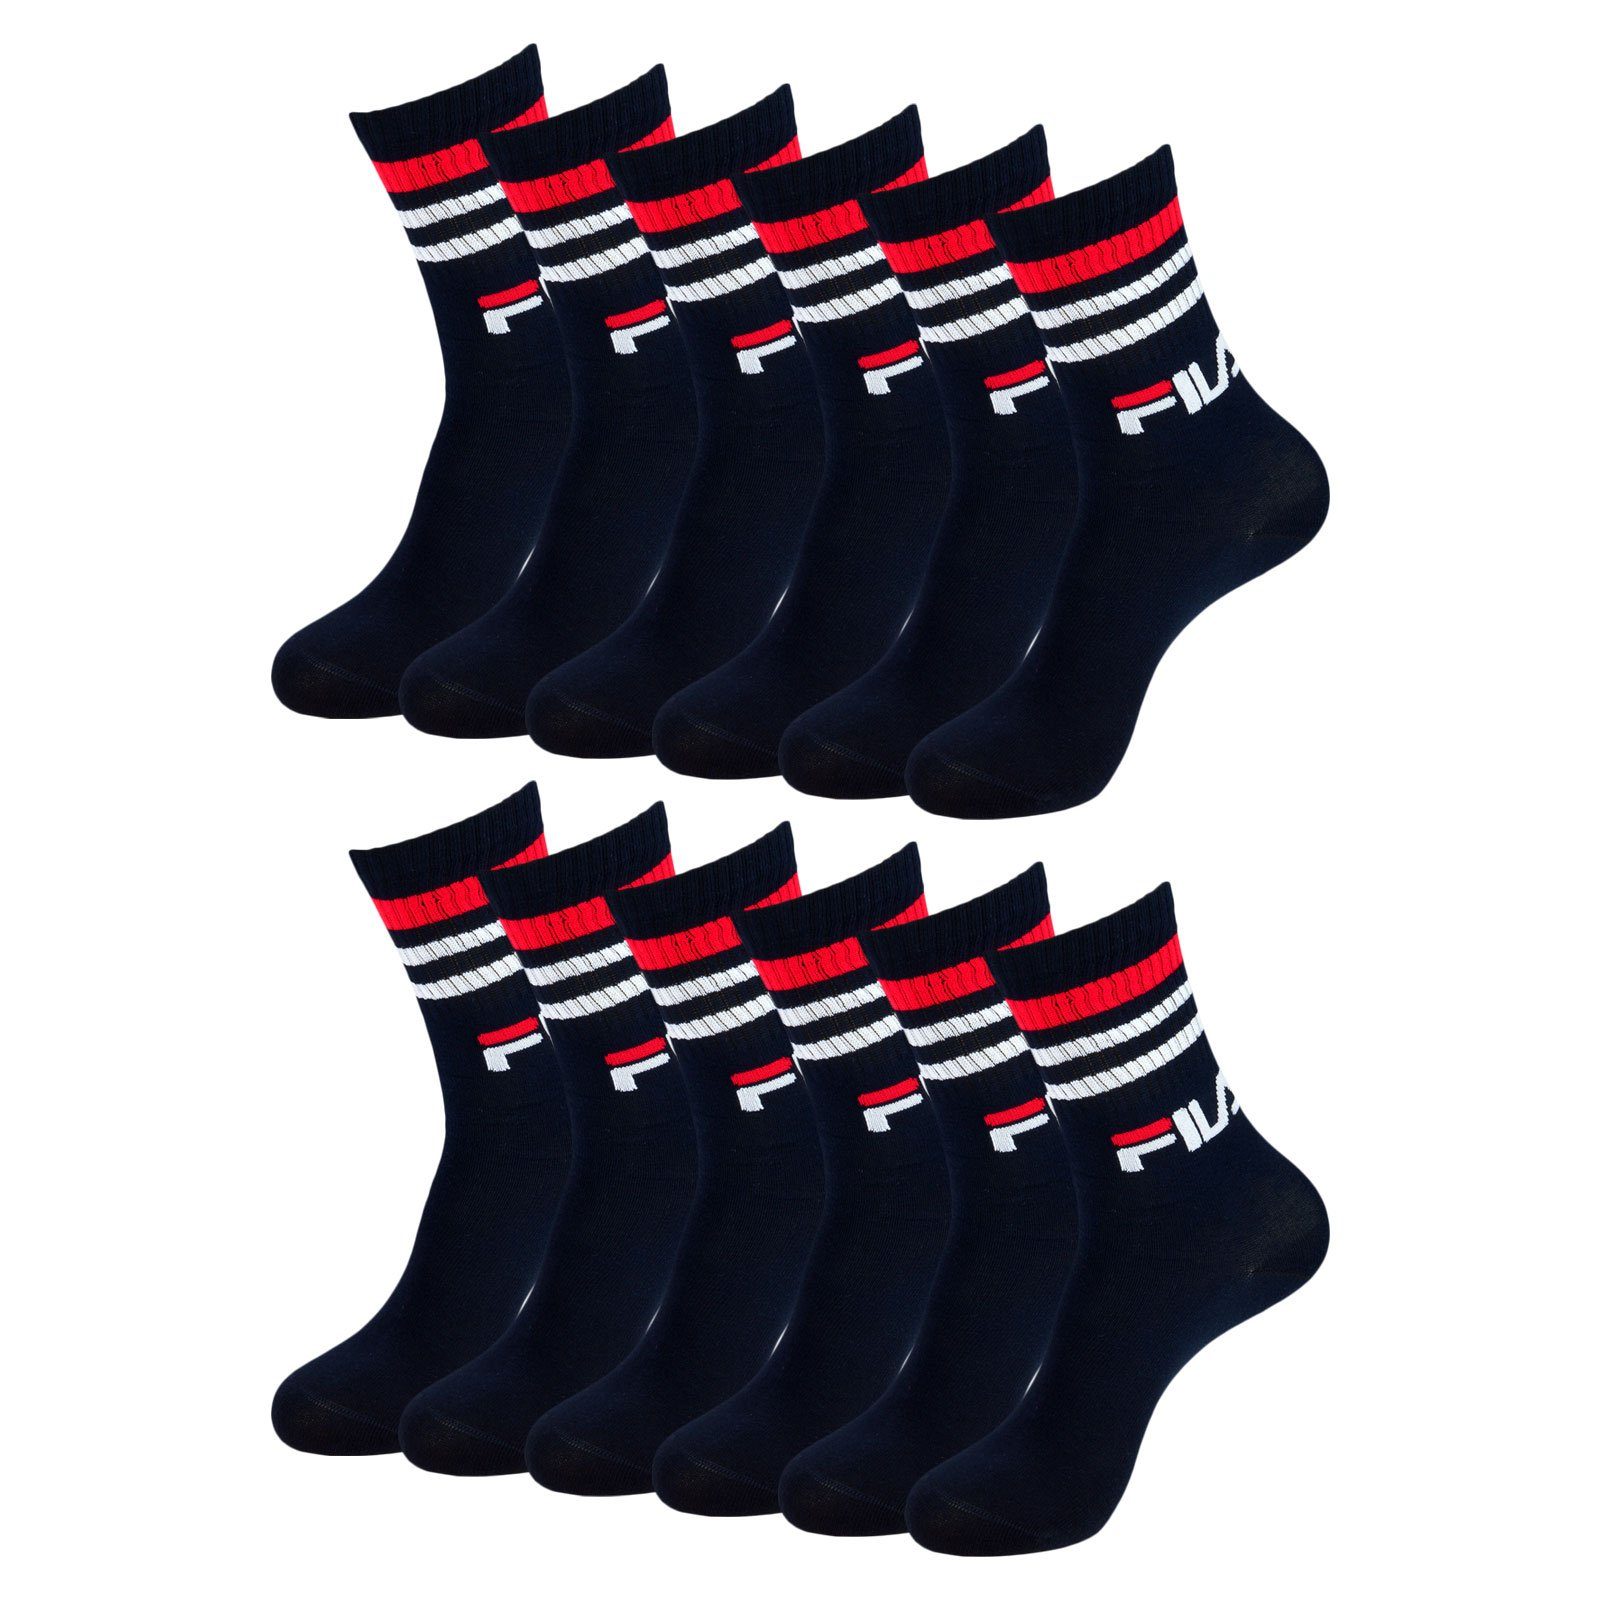 Fila Langsocken »Crow Socks Calze« (6-Paar) im sportlichen Retrolook mit  Rippbündchen